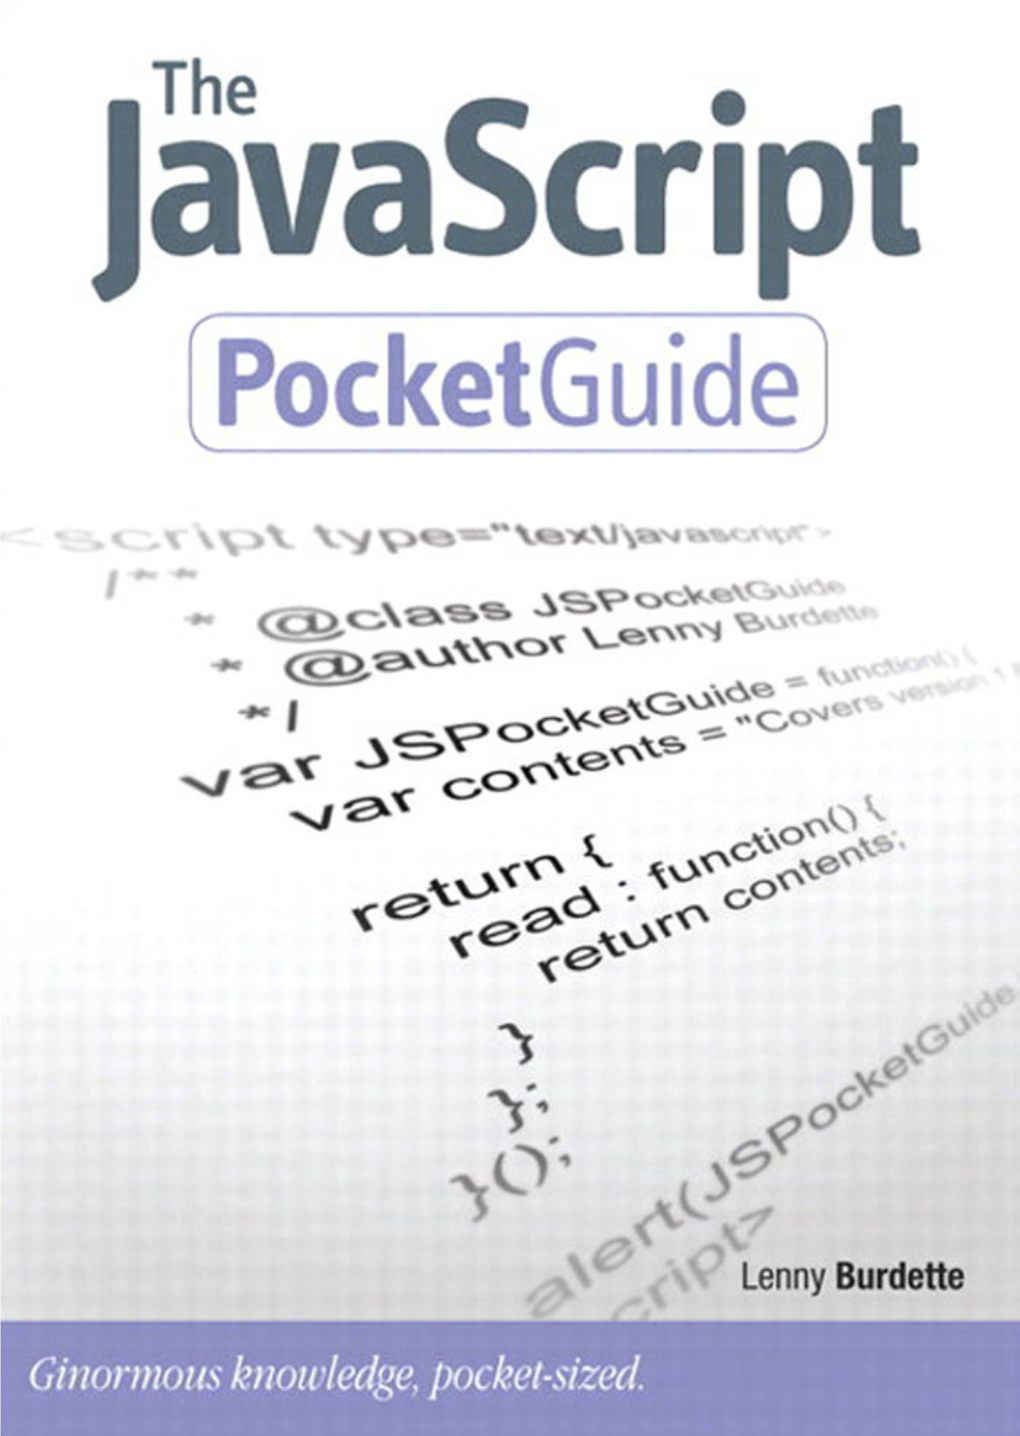 The Javascript Pocket Guide.Pdf